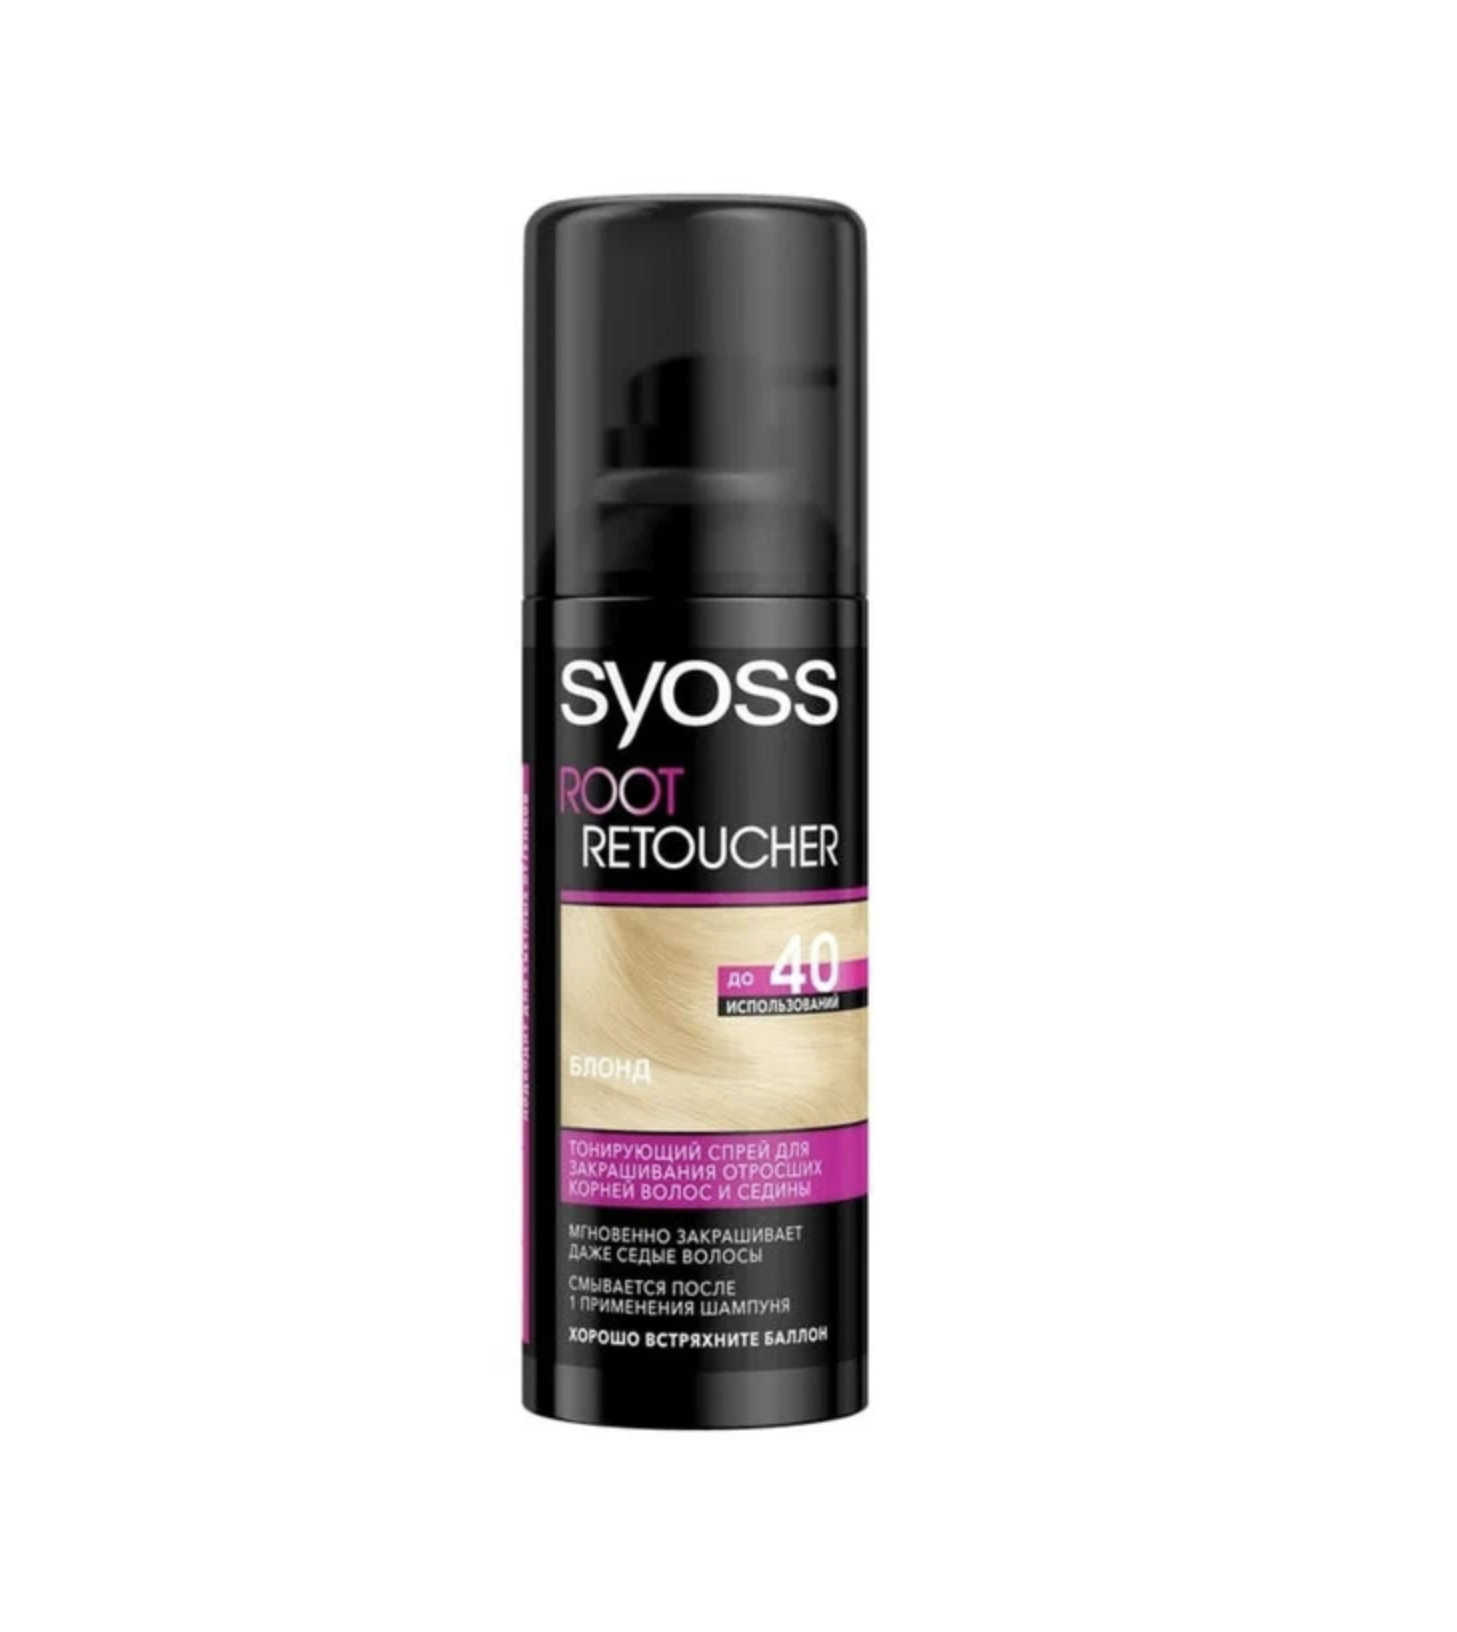   / Syoss Root Retoucher -       120 